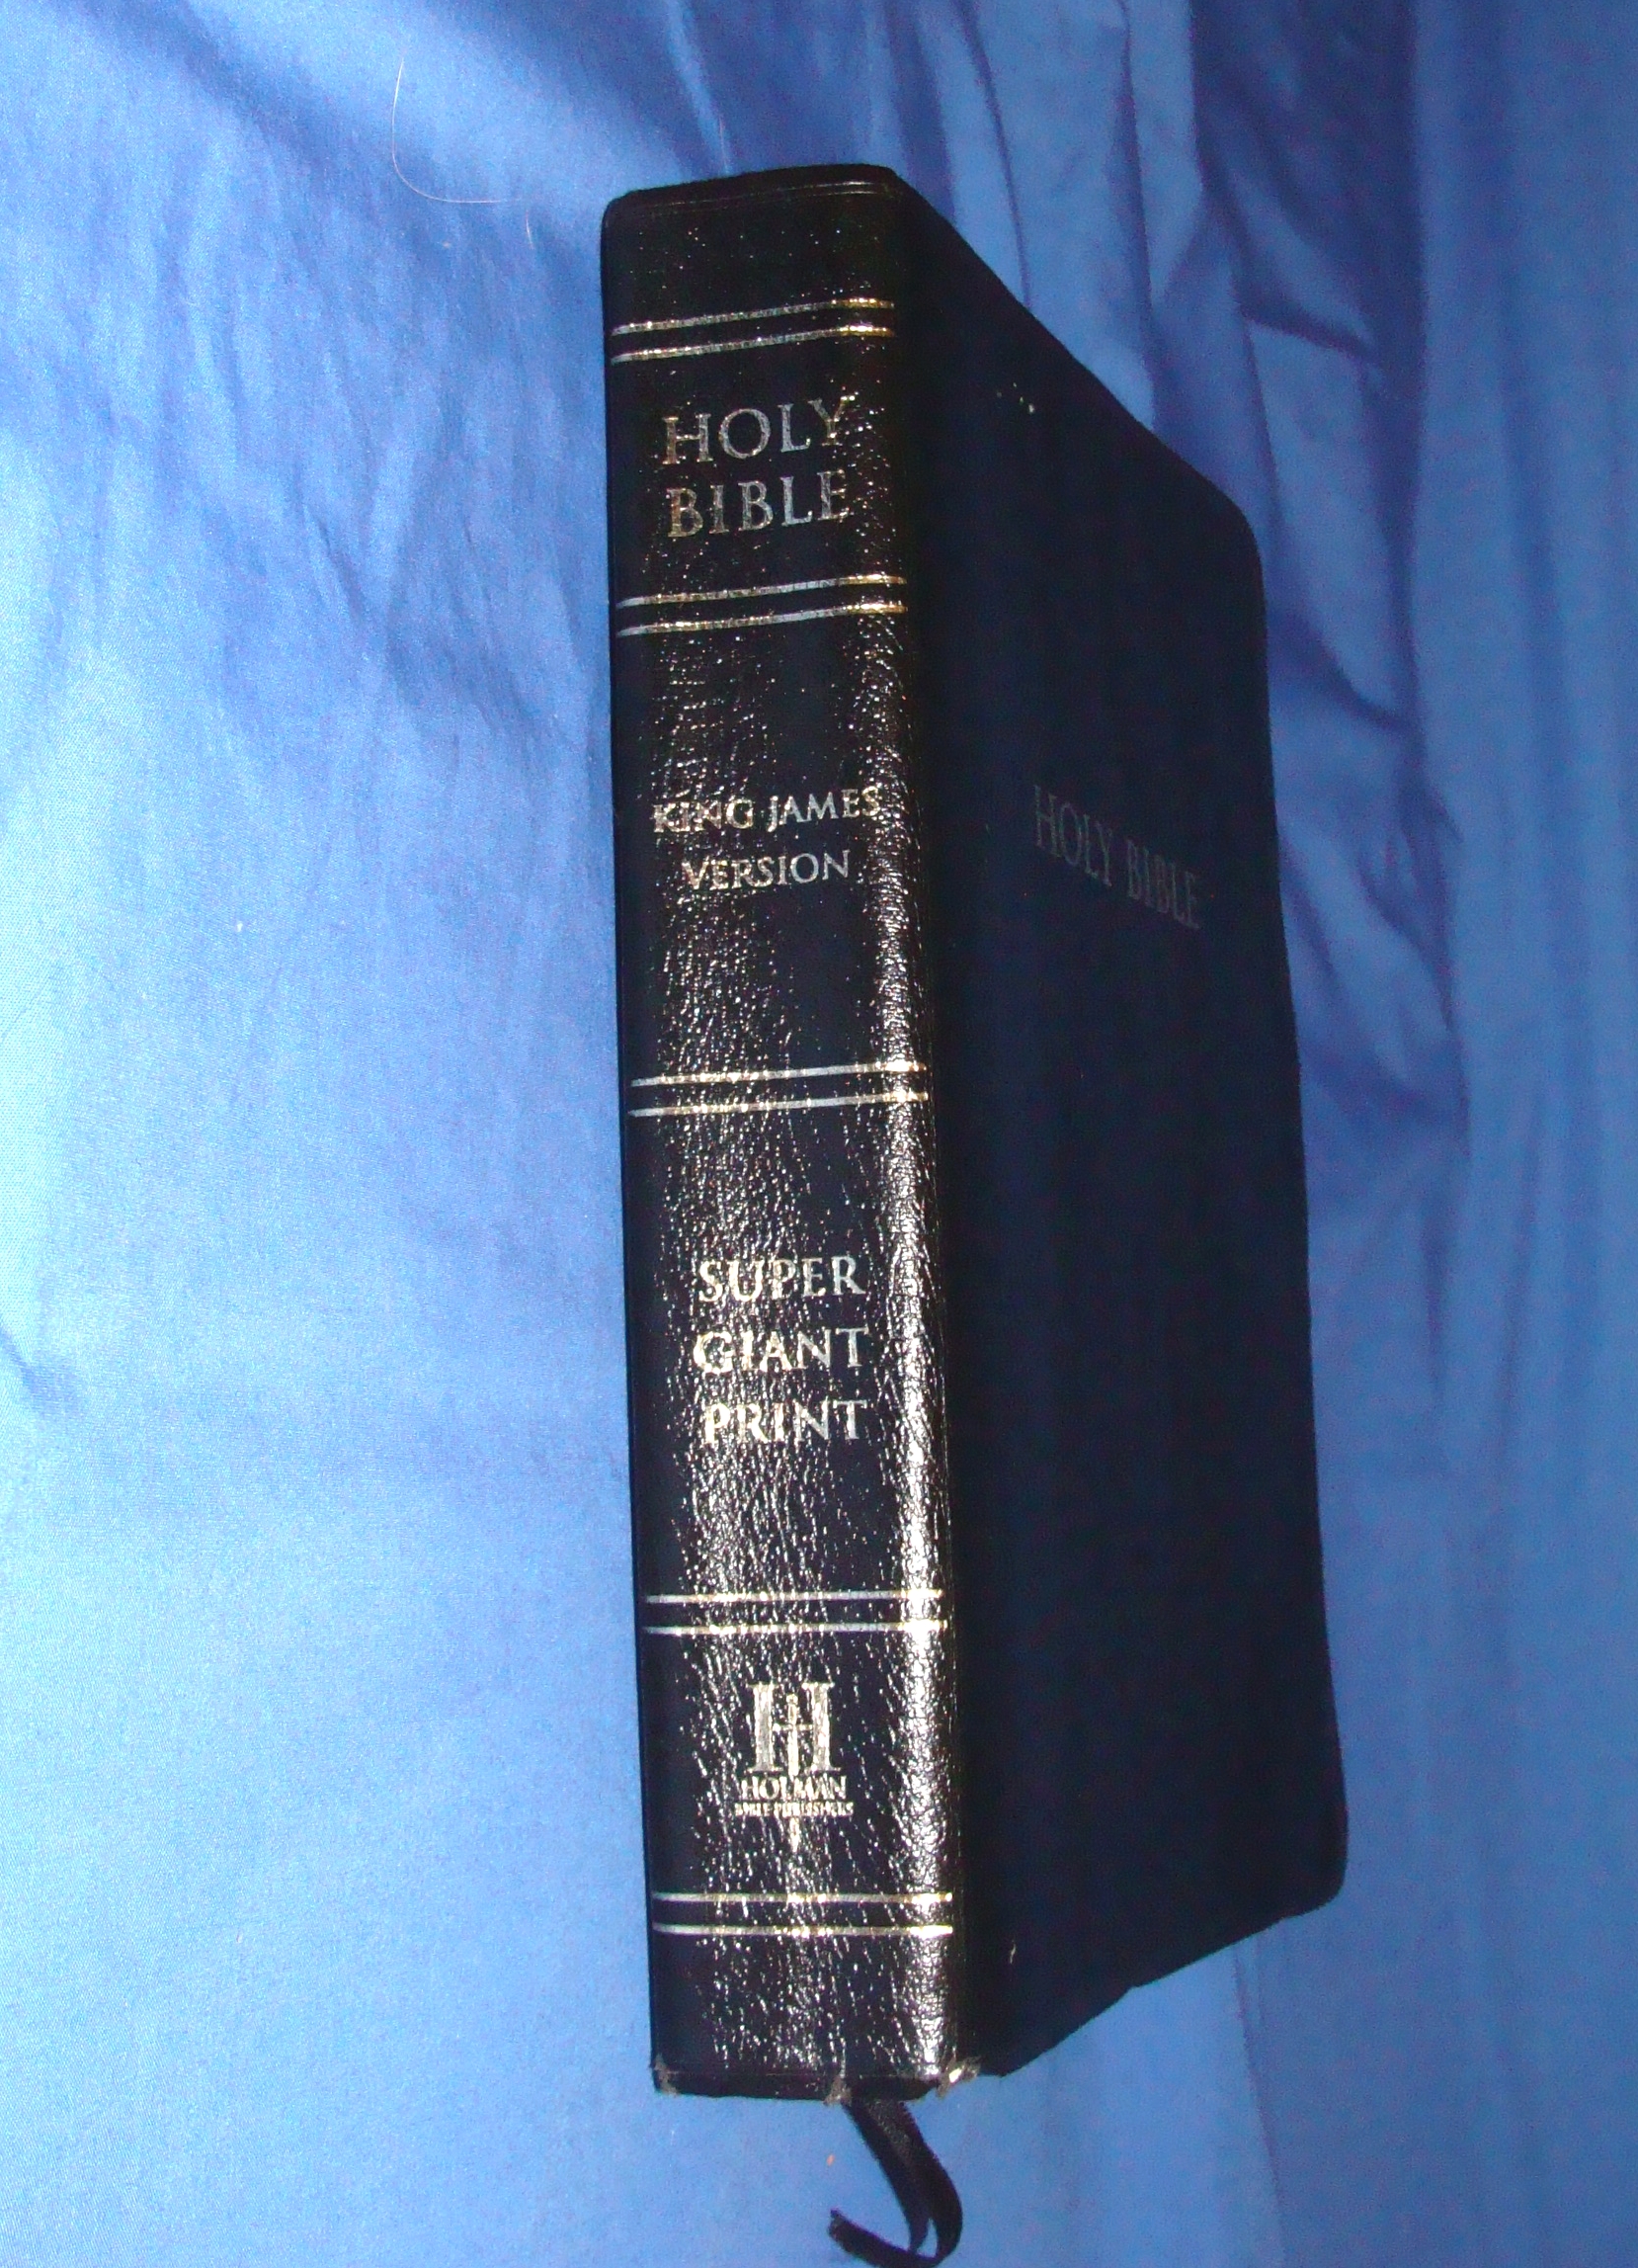 1 Volume, 18 Point Print Bible